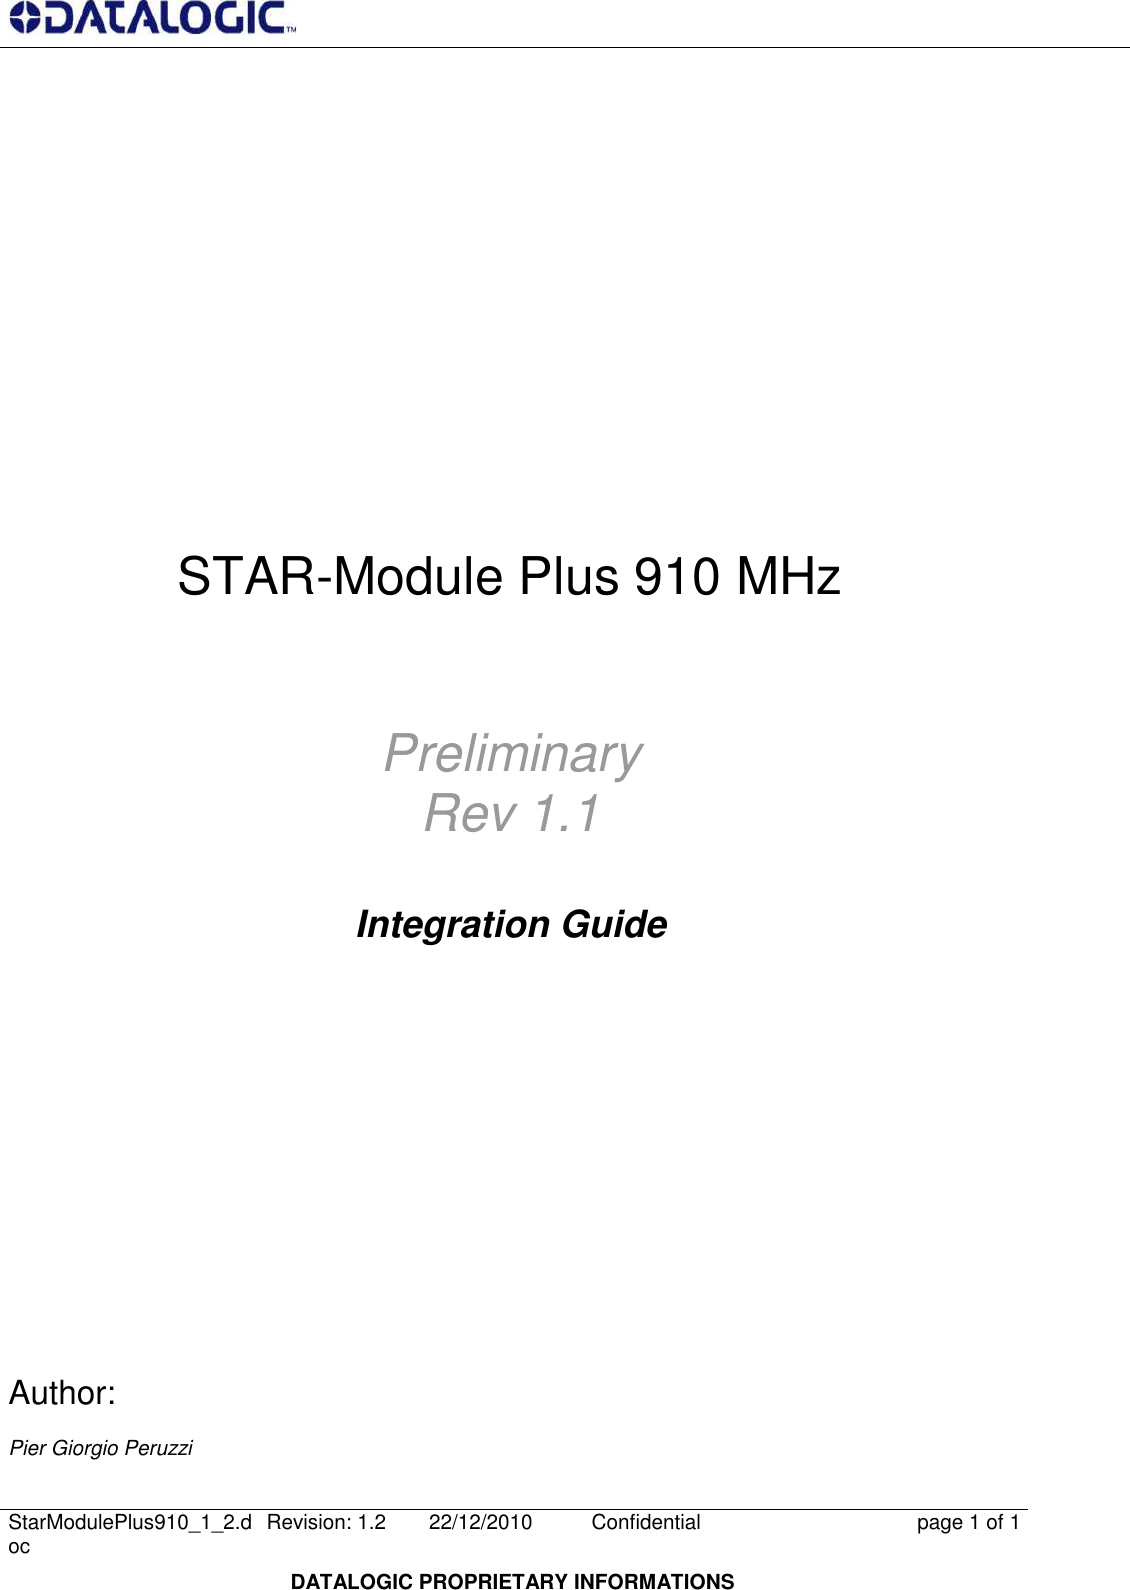      StarModulePlus910_1_2.doc  Revision: 1.2  22/12/2010  Confidential  page 1 of 1  DATALOGIC PROPRIETARY INFORMATIONS         STAR-Module Plus 910 MHz   Preliminary Rev 1.1  Integration Guide            Author:   Pier Giorgio Peruzzi   